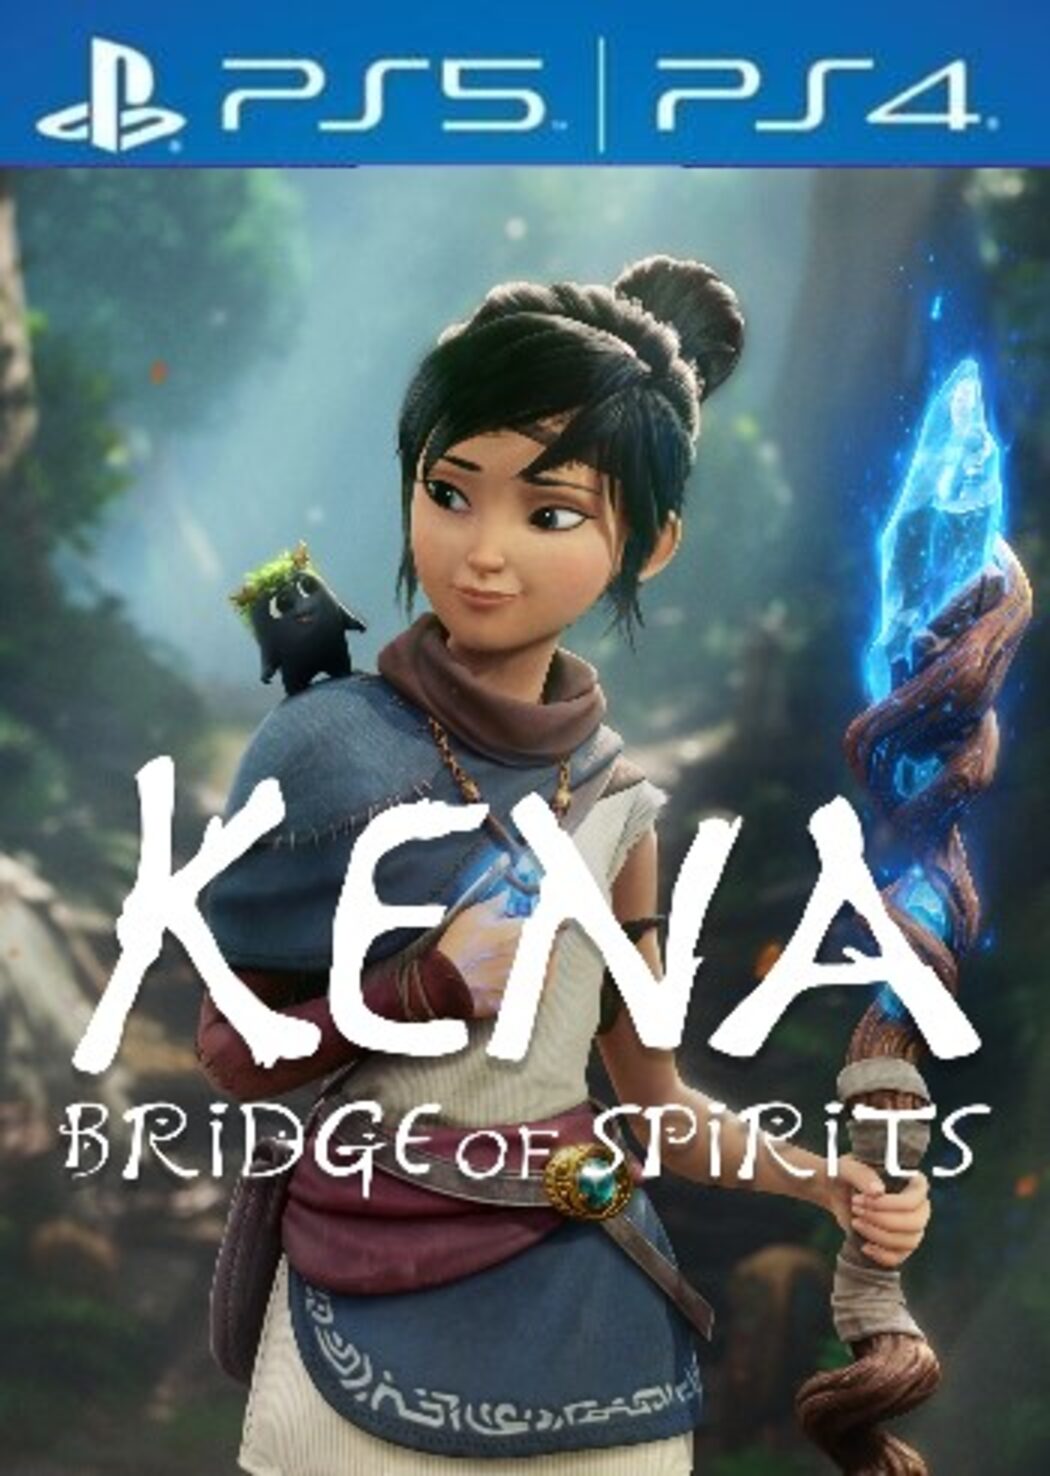 Kena: Bridge of Spirits - Deluxe Edition (PS5) - PlayStation 5